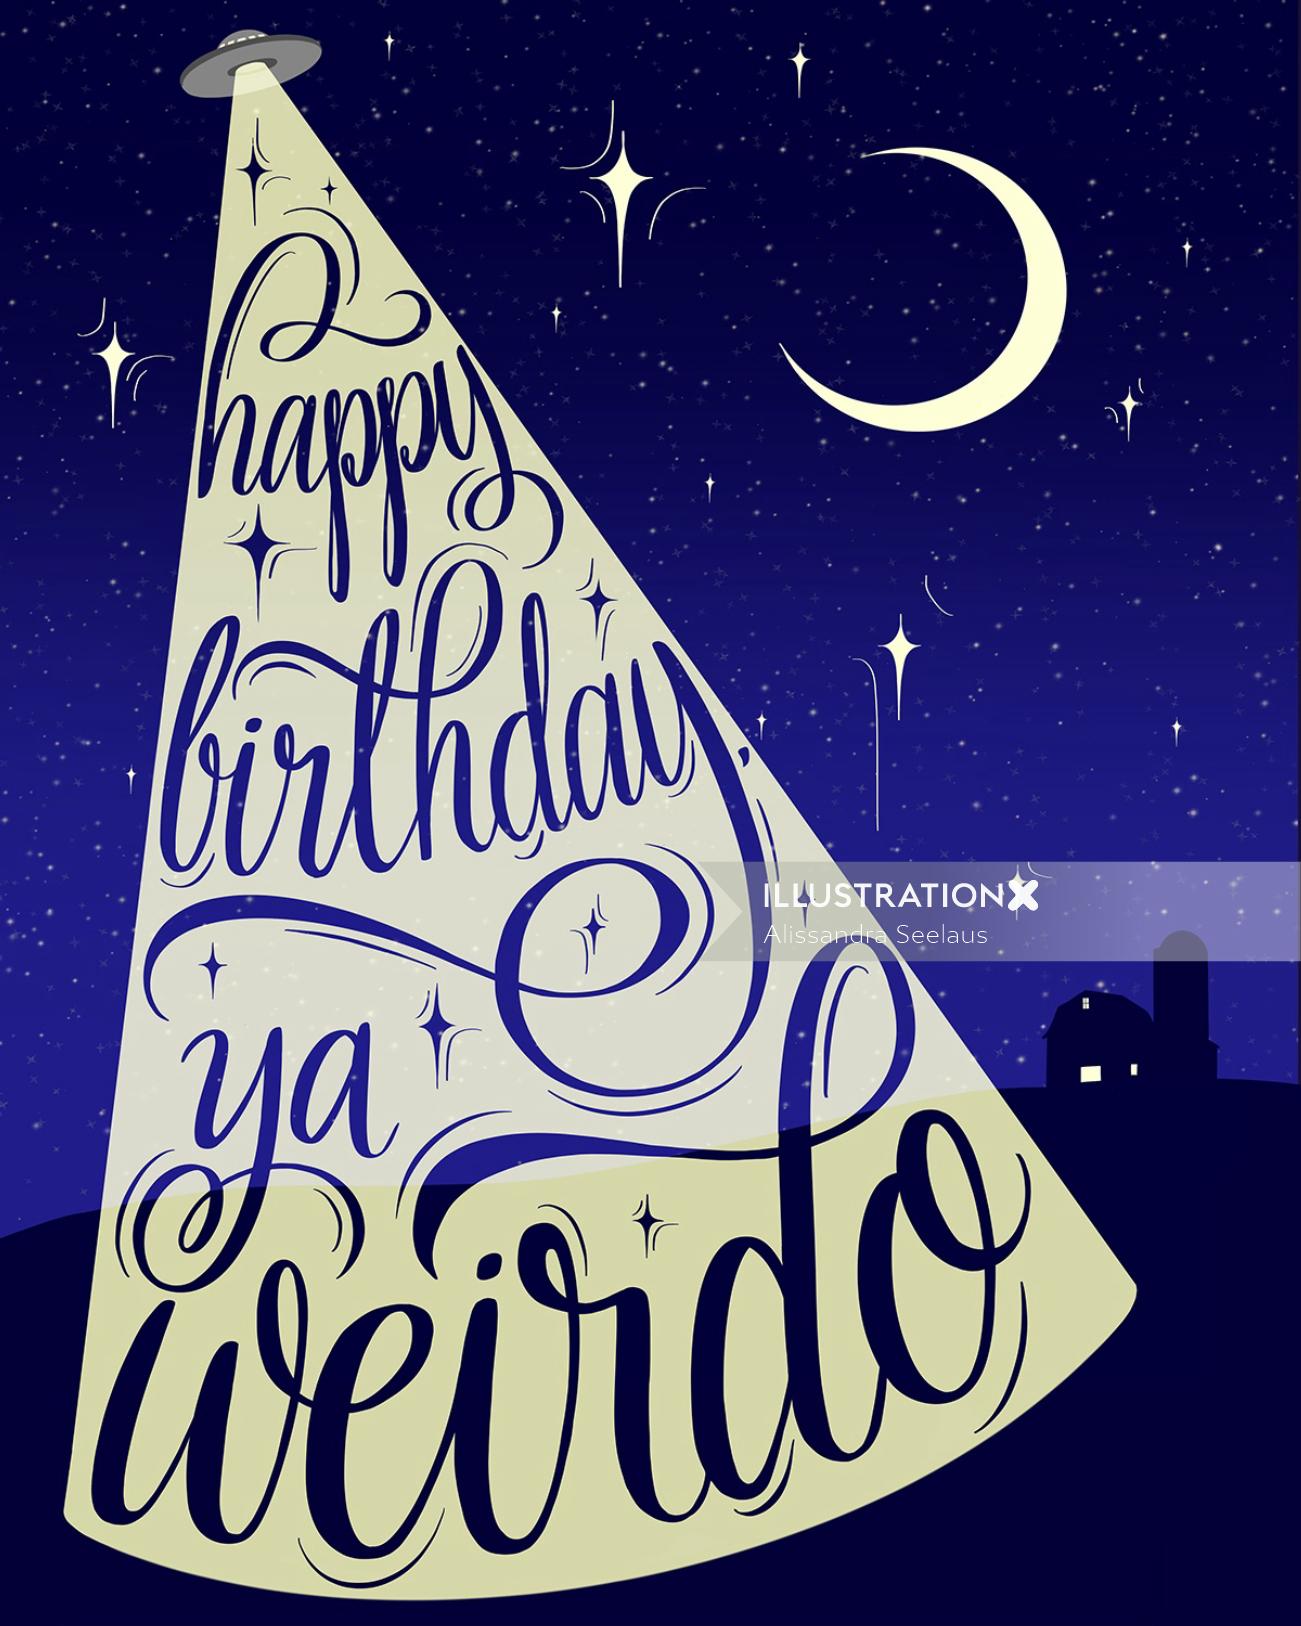 Happy birthday lettering poster design 